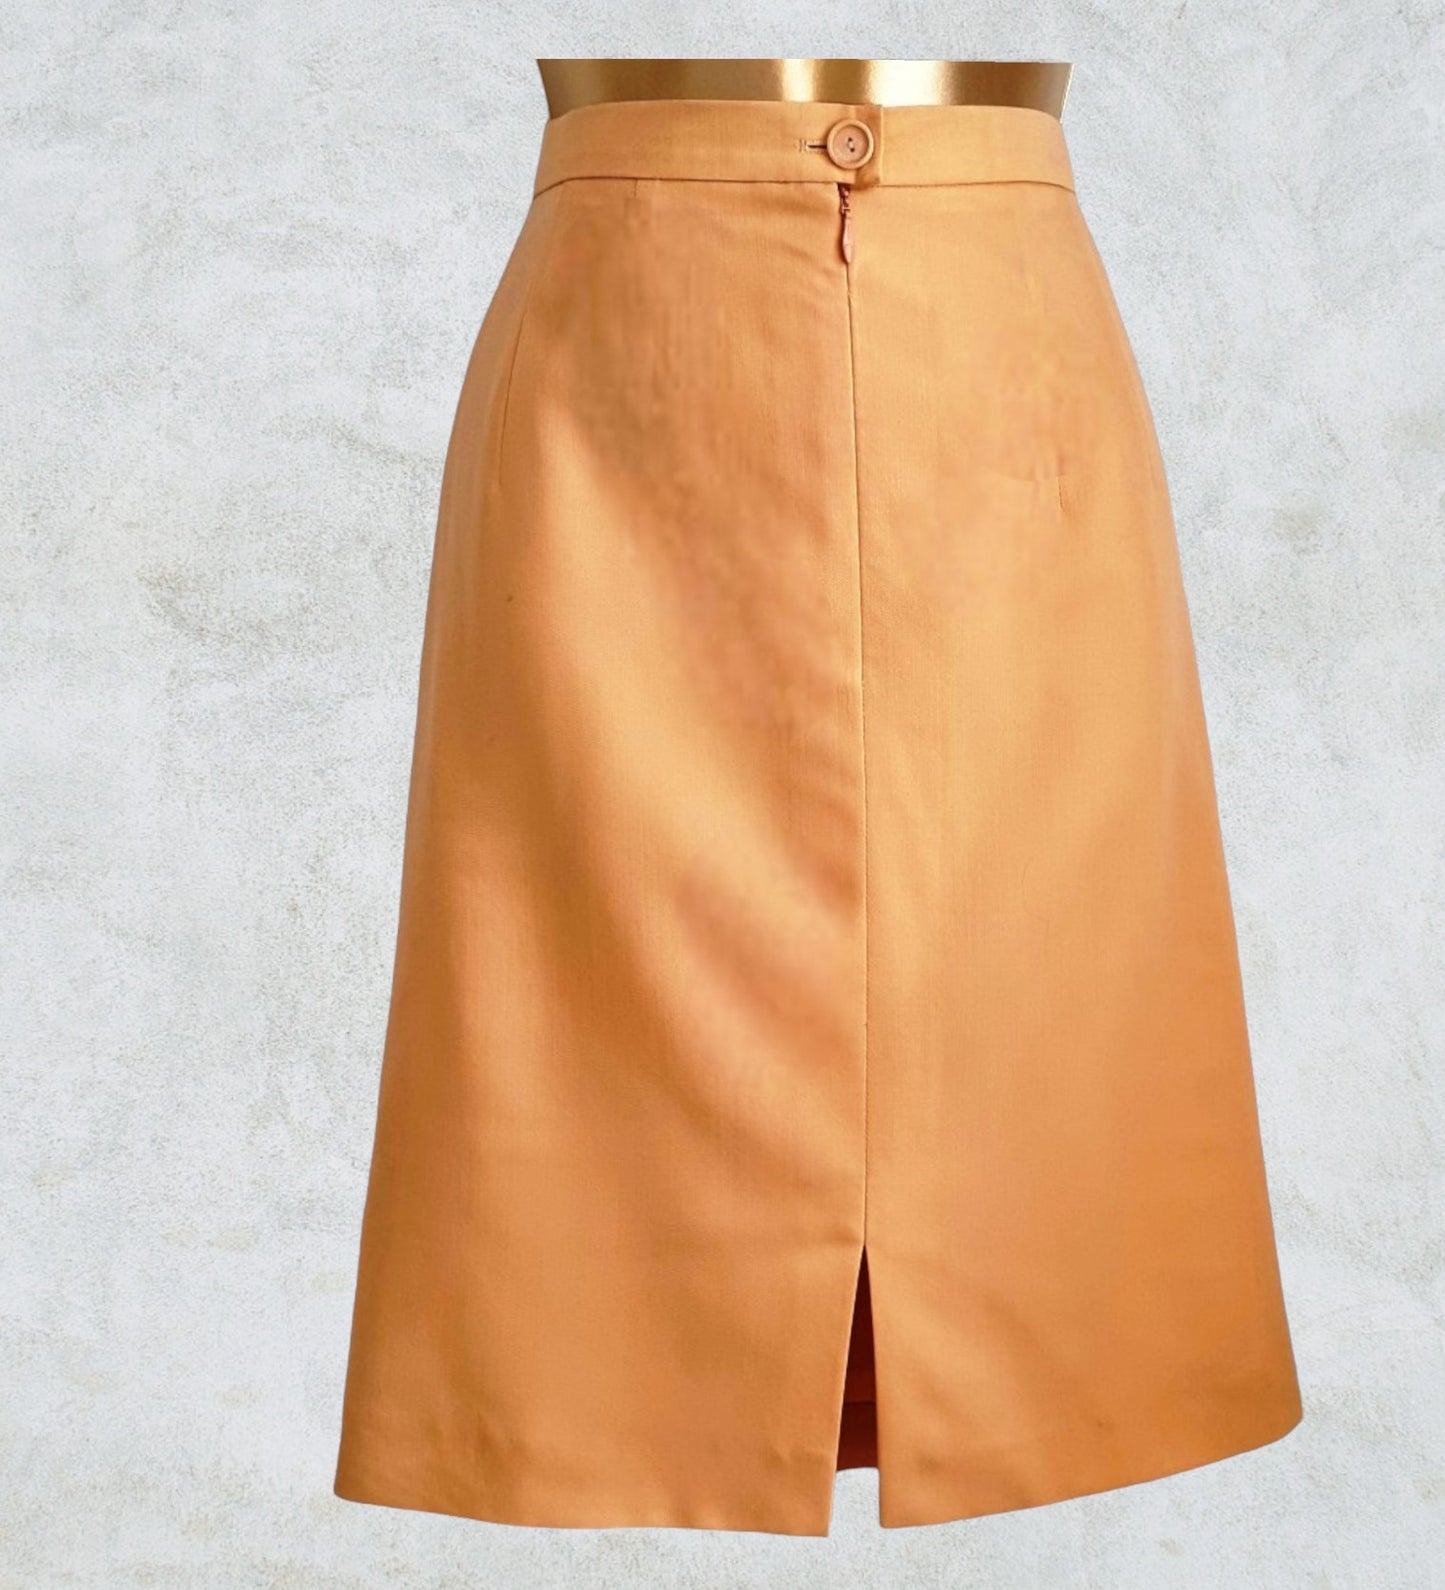 Louis Feraud Paris Peach Contraire Lined Wool Skirt UK 12 US 8 EU 40 Timeless Fashions